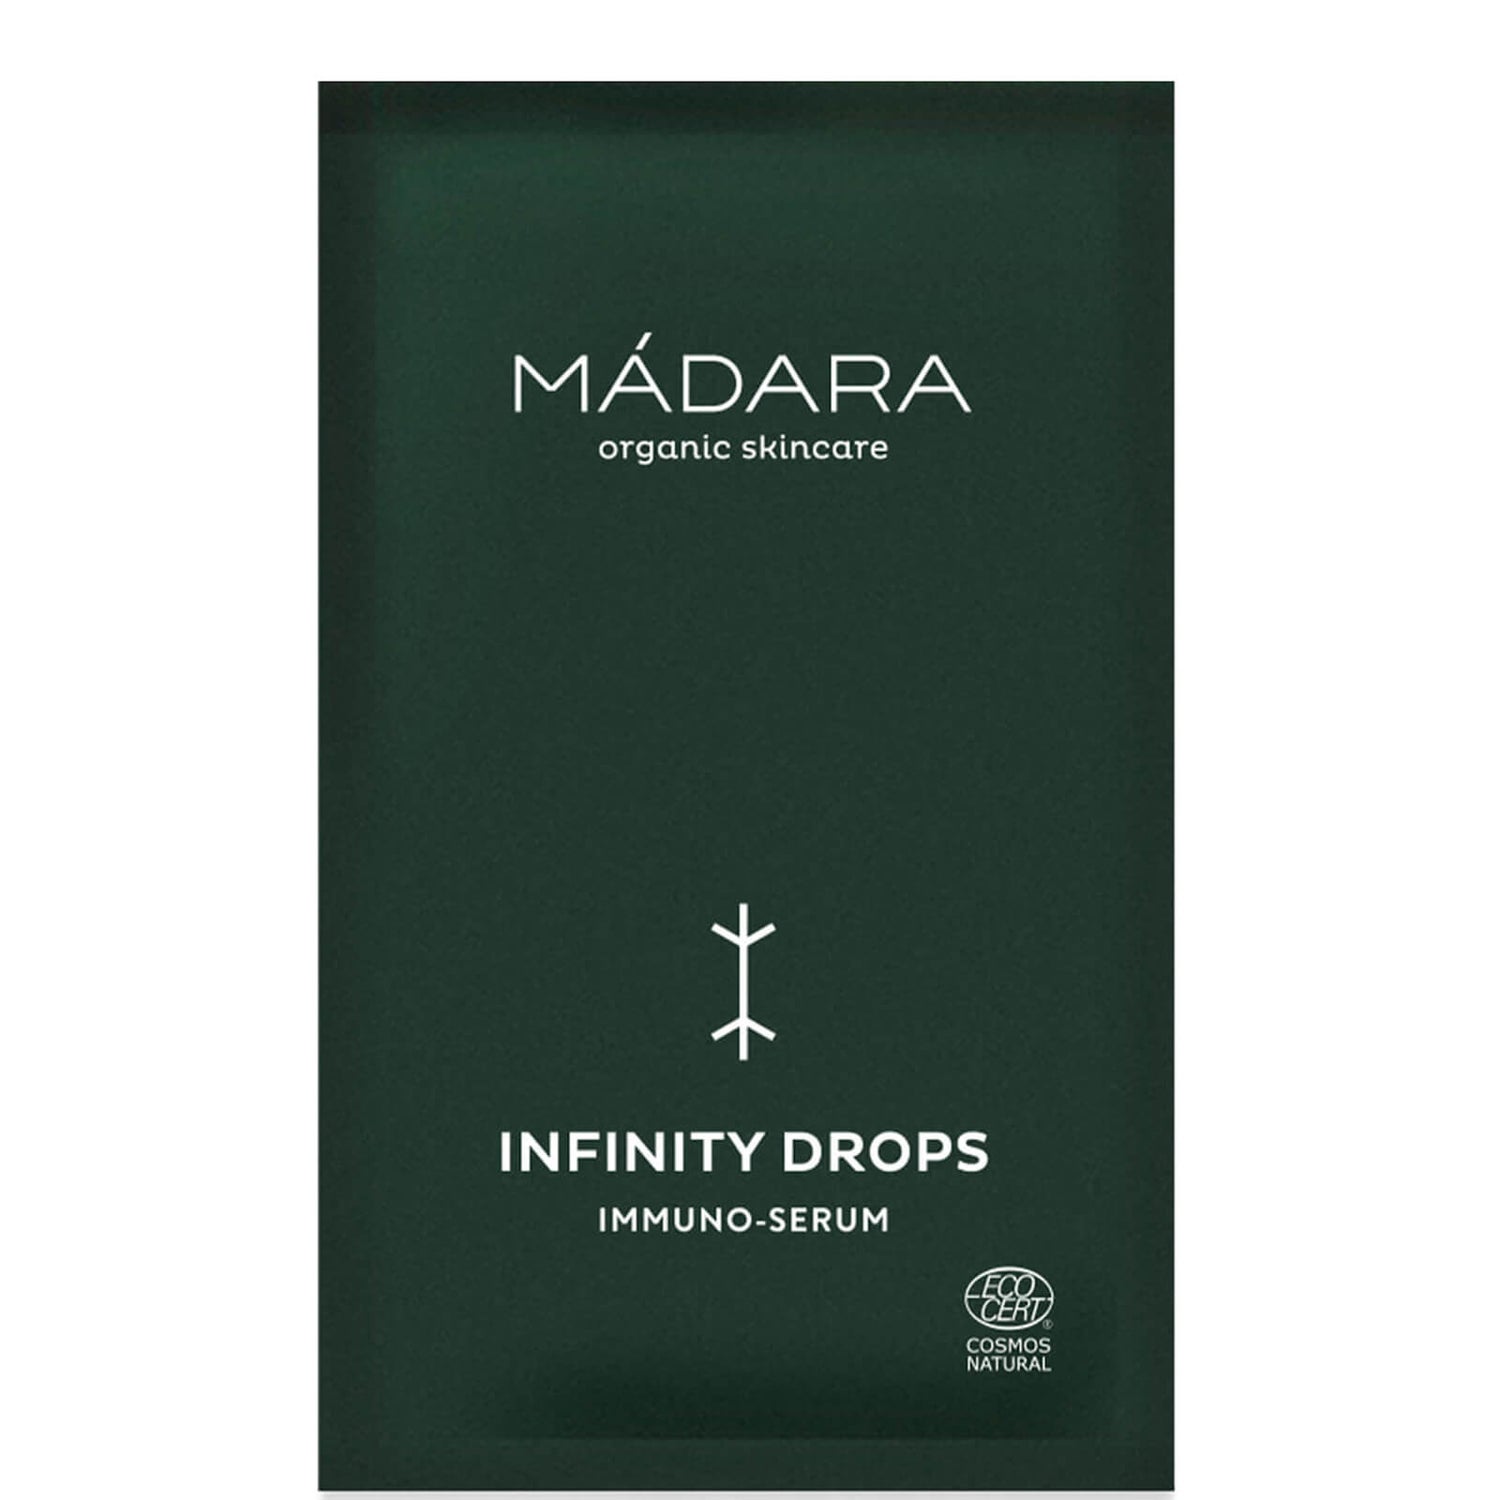 MÁDARA Infinity Drops Immuno-Serum